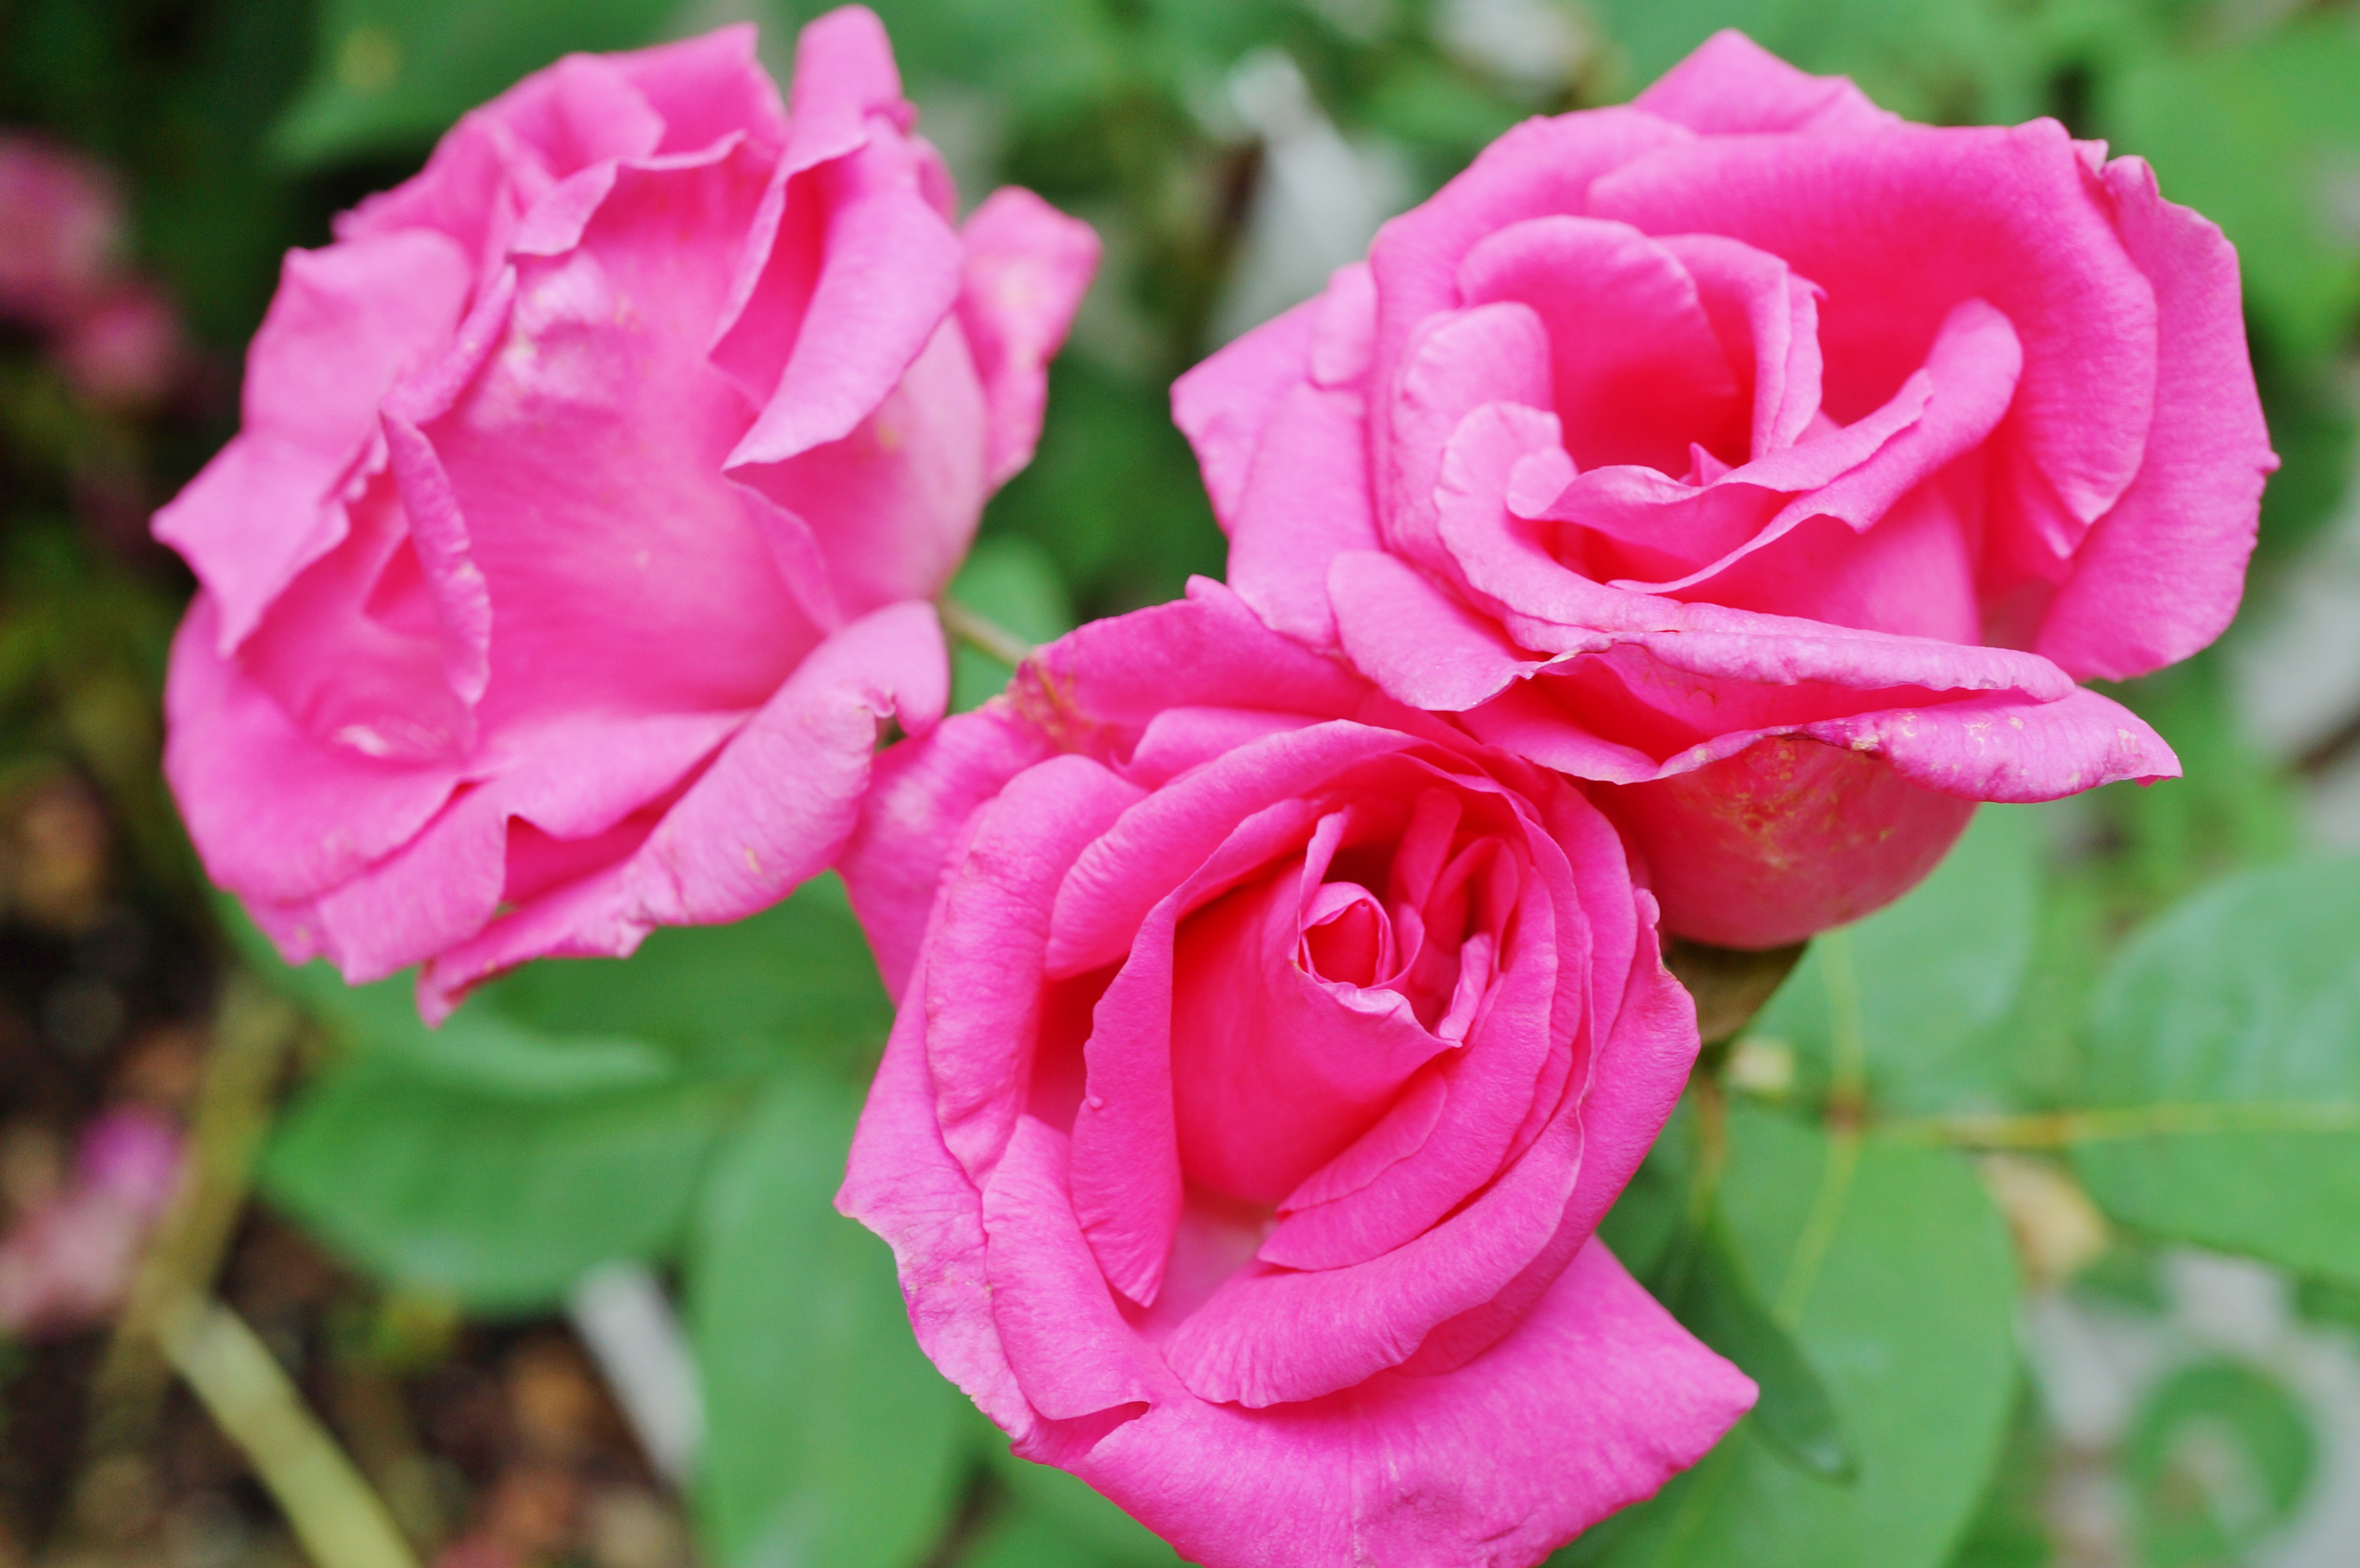 Fragrant pink blooms of the heirloom Zephirine Drouhin climbing rose